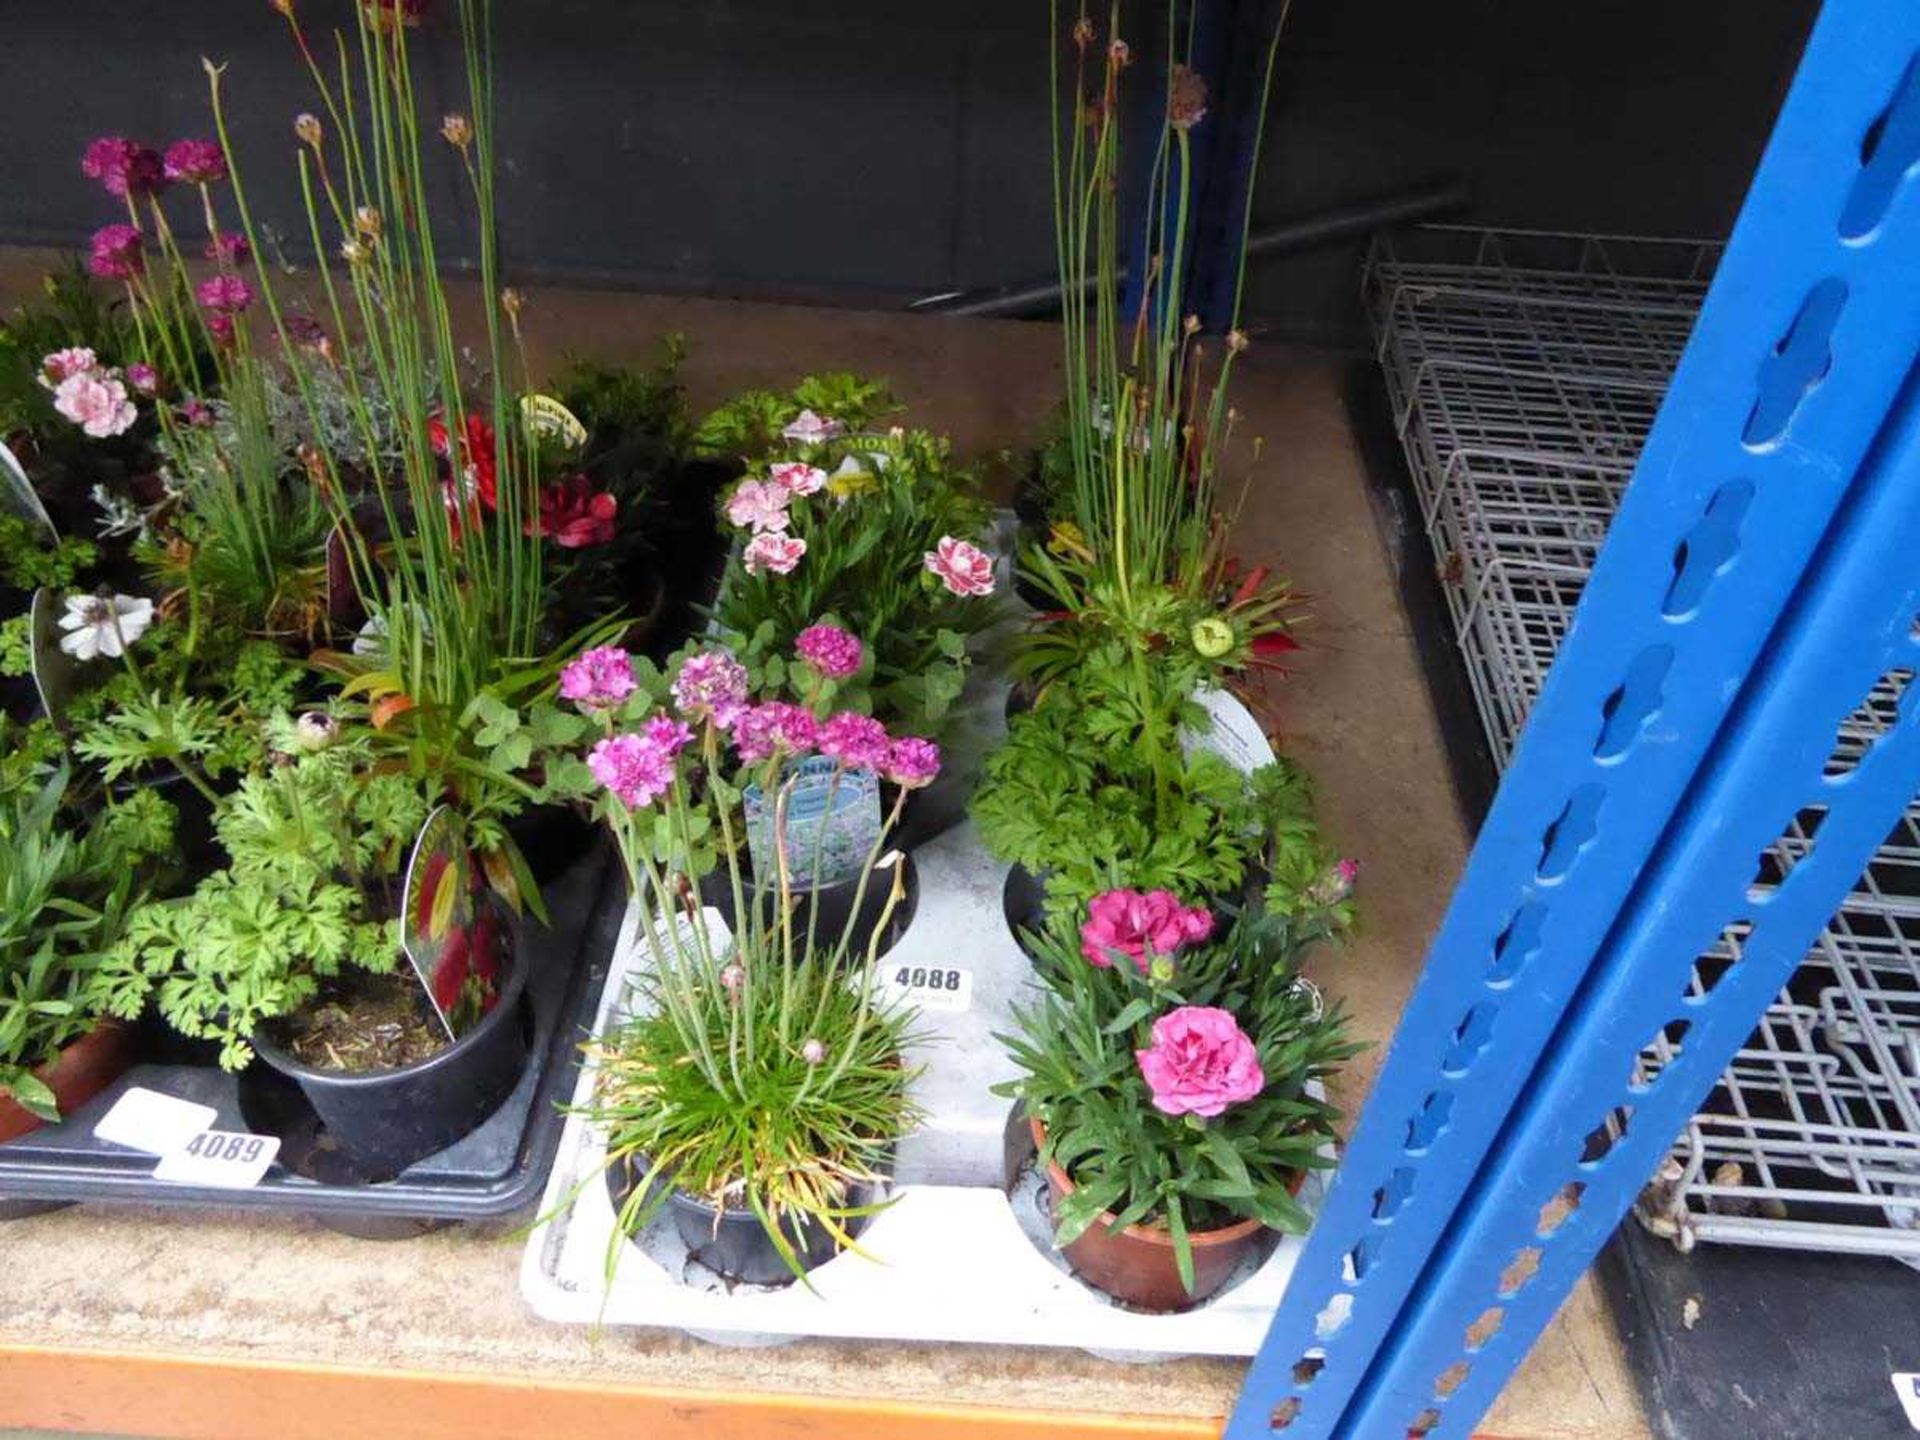 Tray of assorted alpine plants